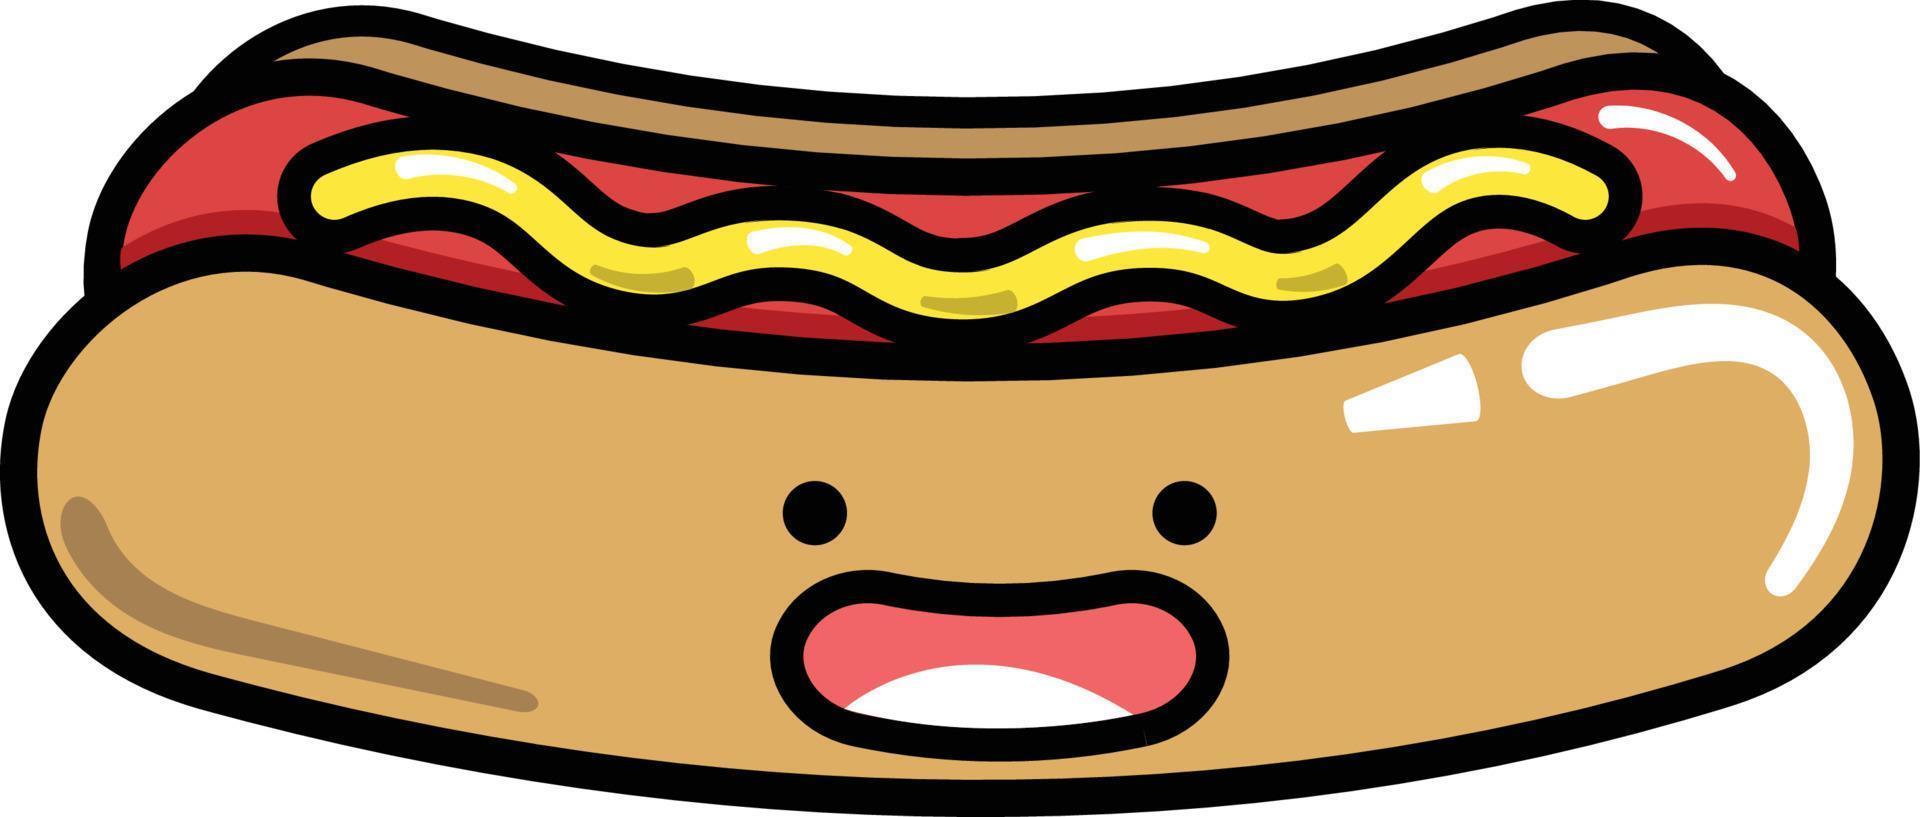 hotdog fast food take out take away vector